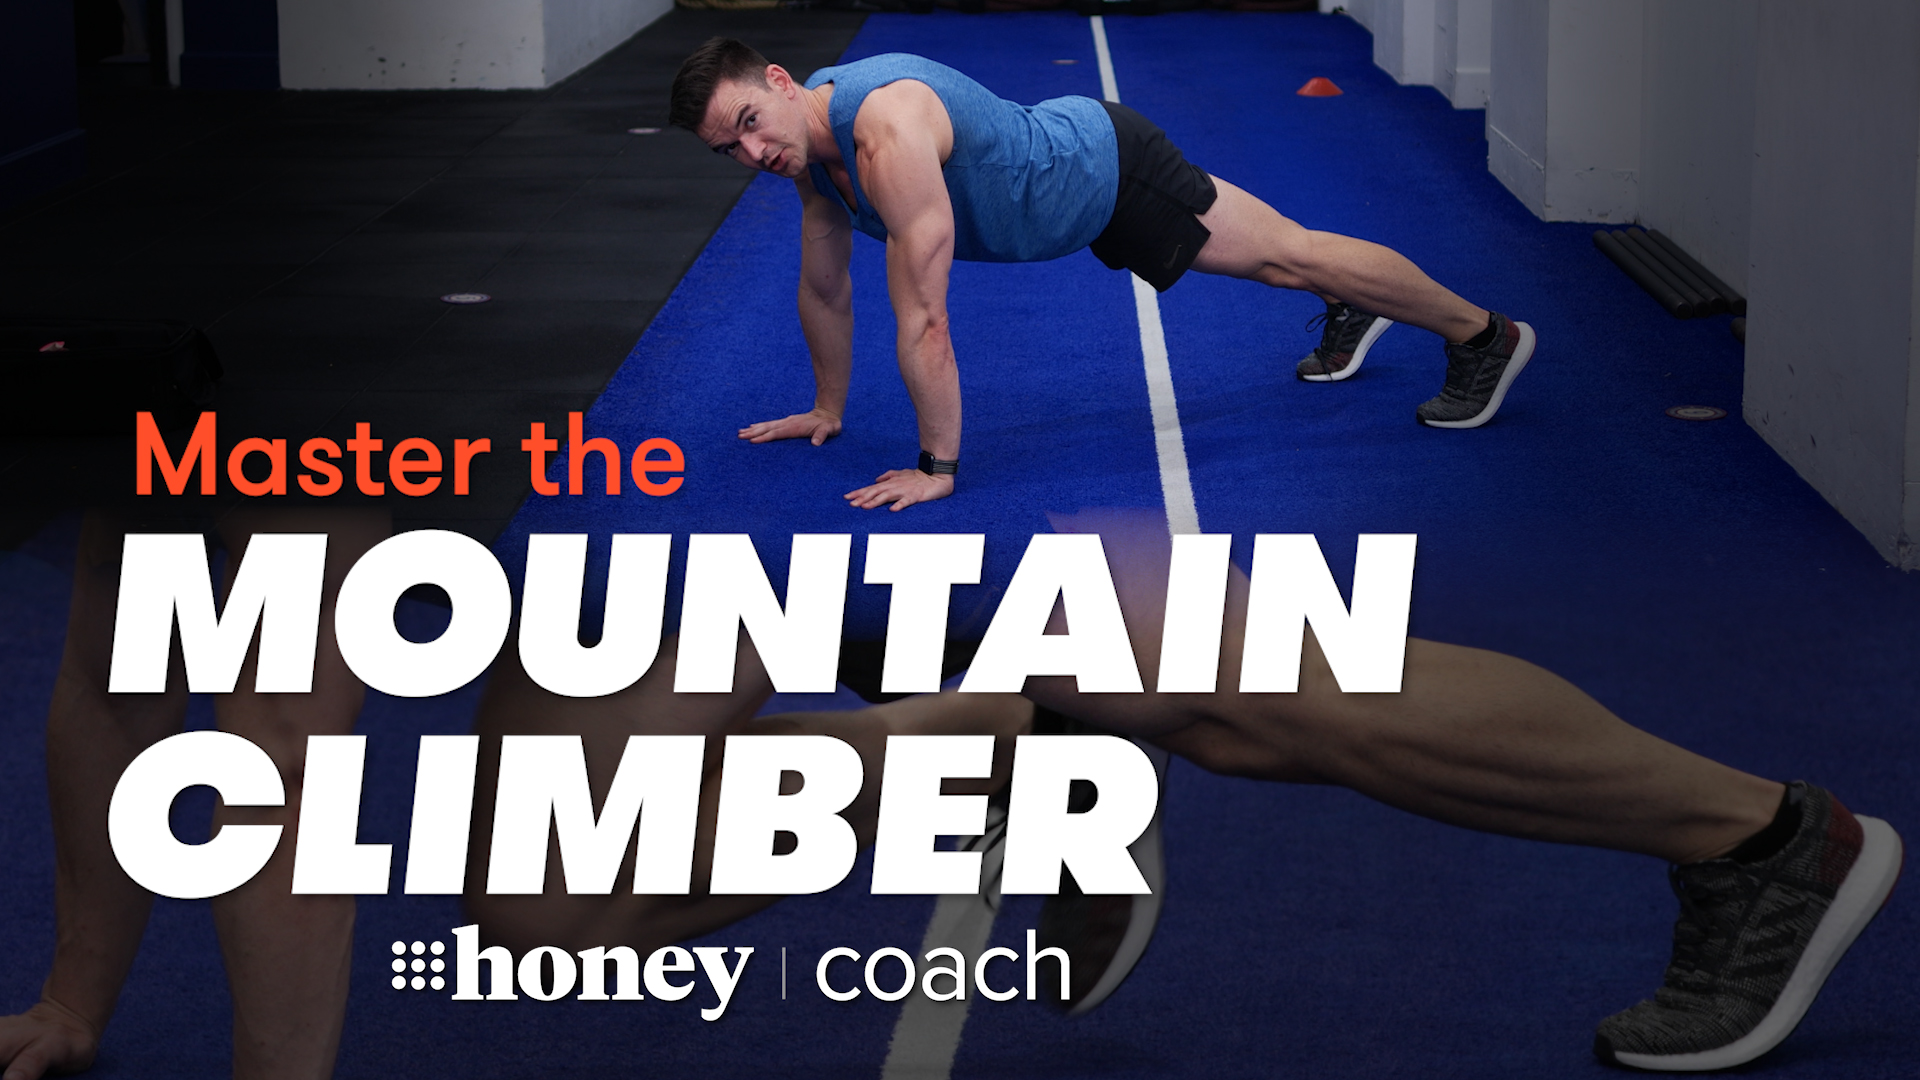 9Honey workout hacks: Mountain climber